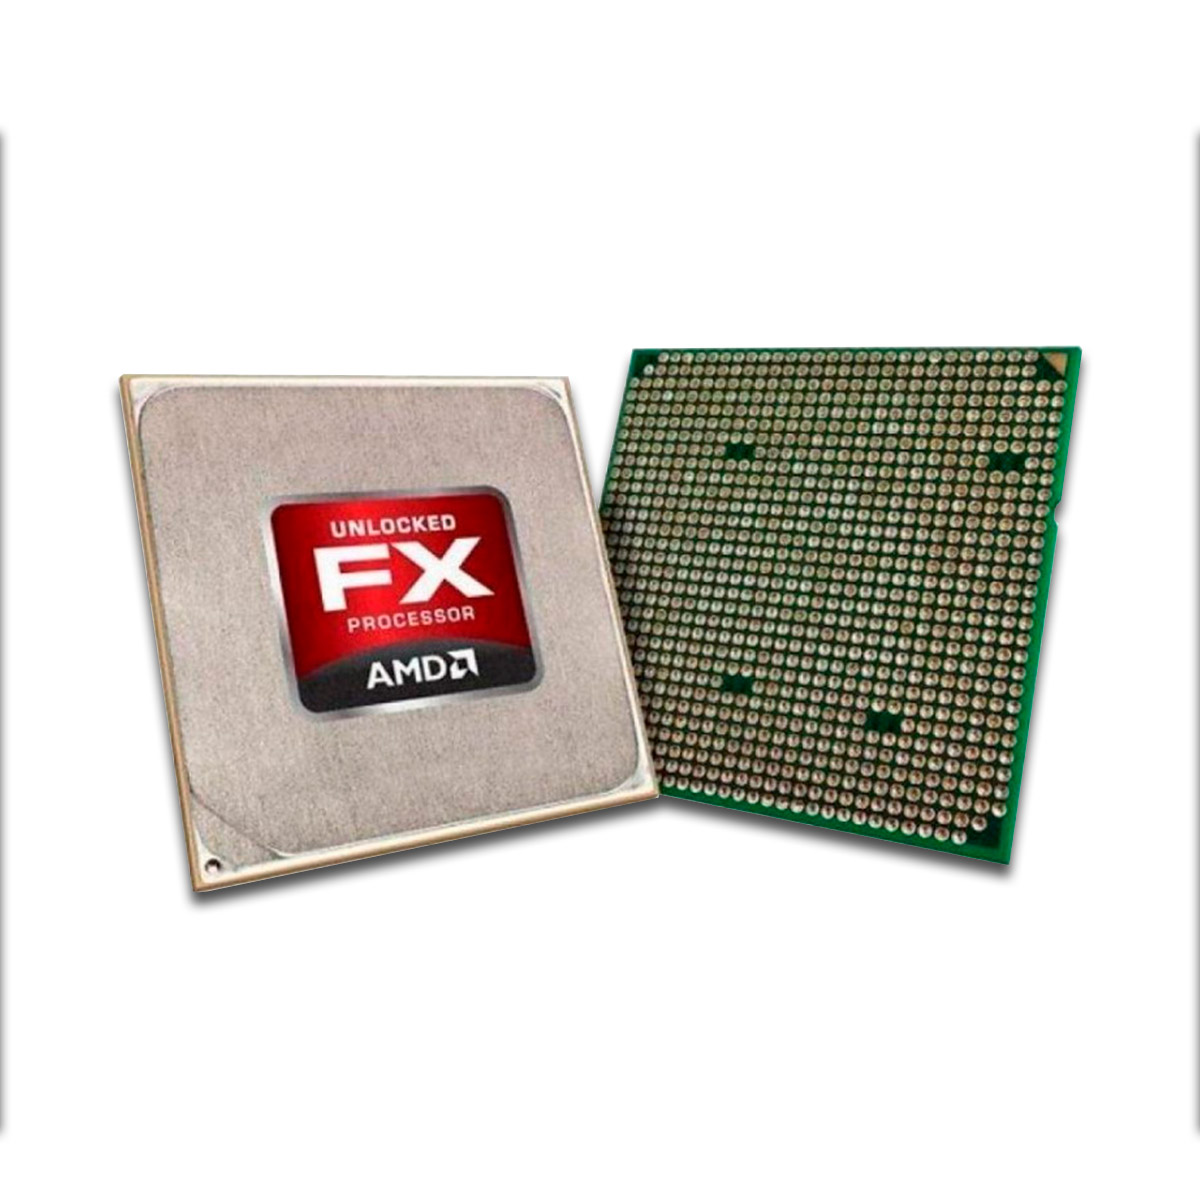 AMD FX-4300 Quad Core - 3.8GHz (Turbo 4.0GHz) Cache 8MB - AM3+ - TDP 95W - OEM